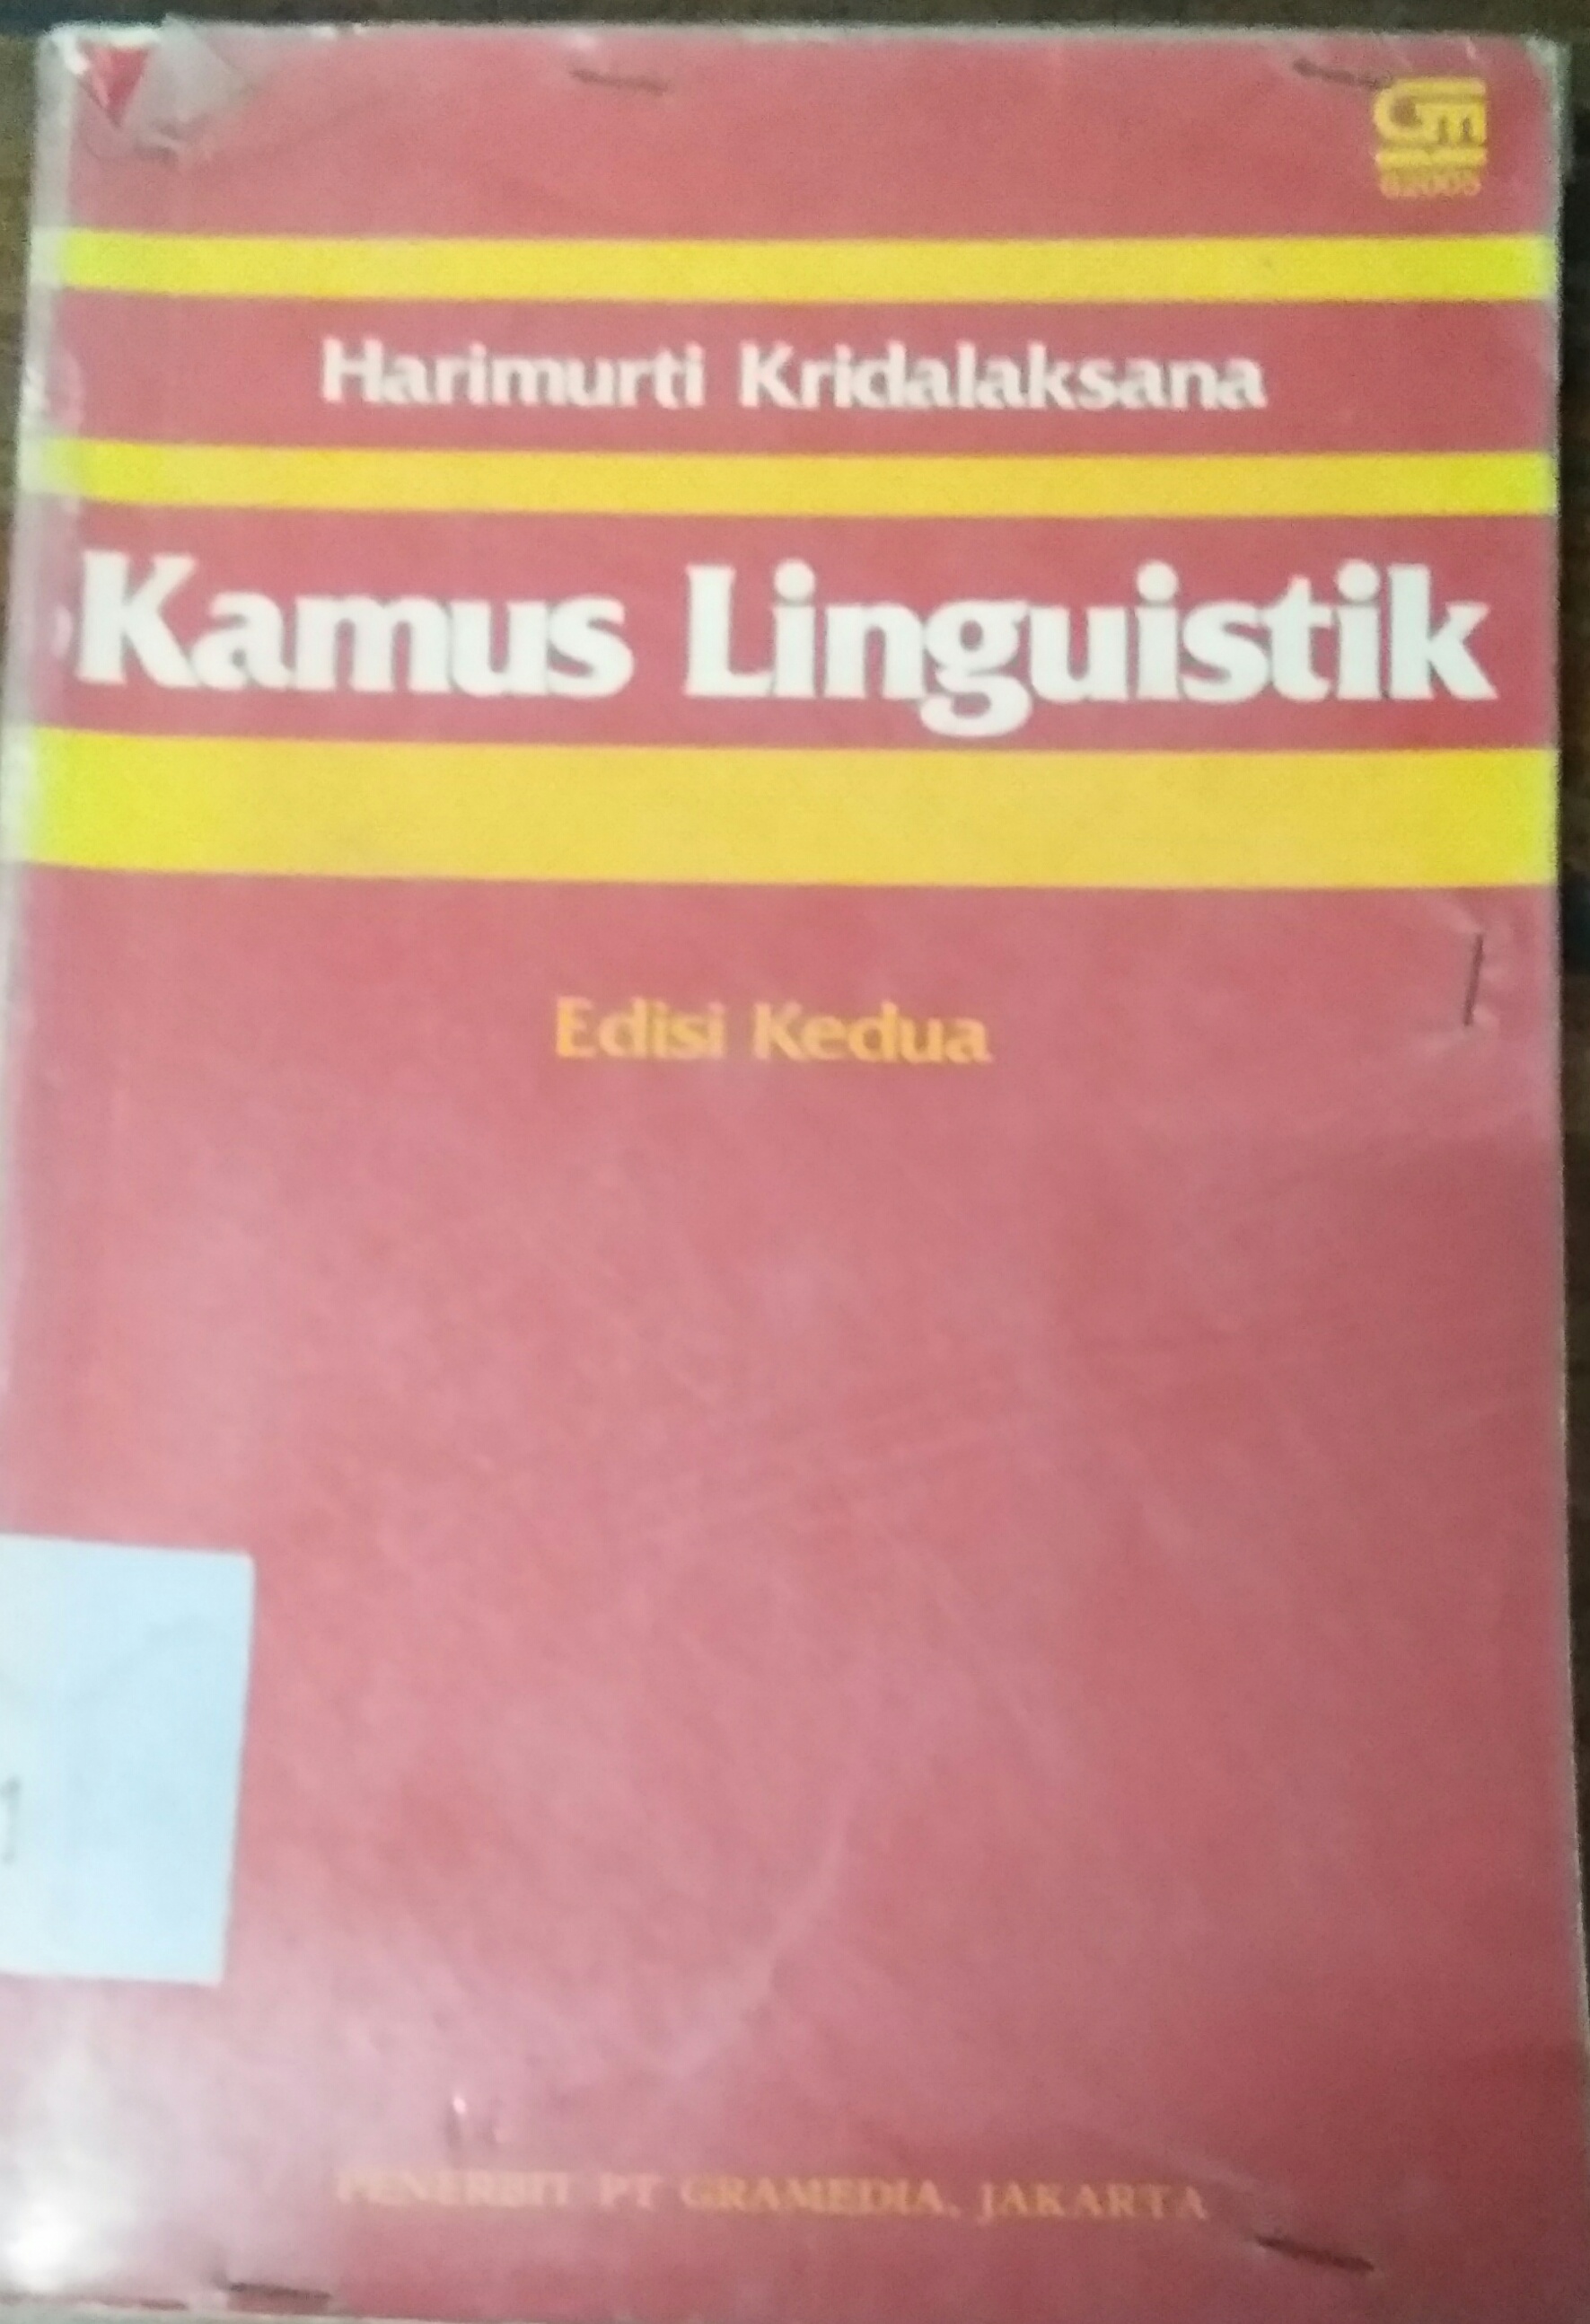 Kamus linguistik